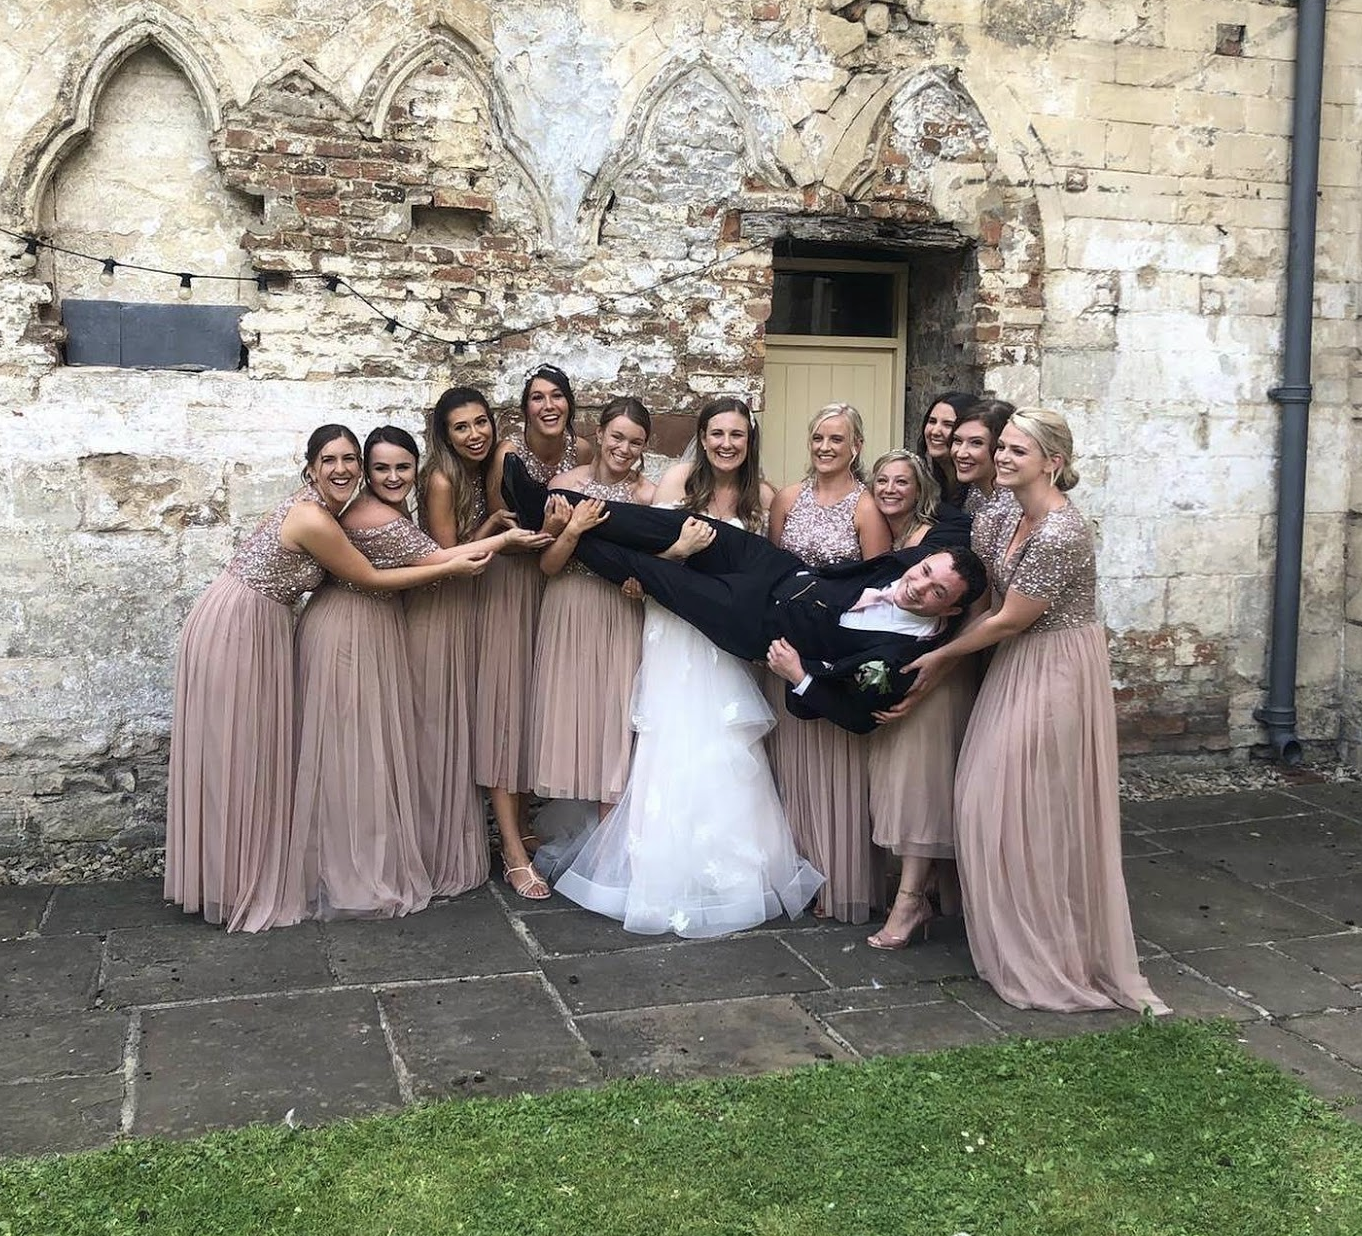 Wedding at Blackfriars, Gloucester in 2019